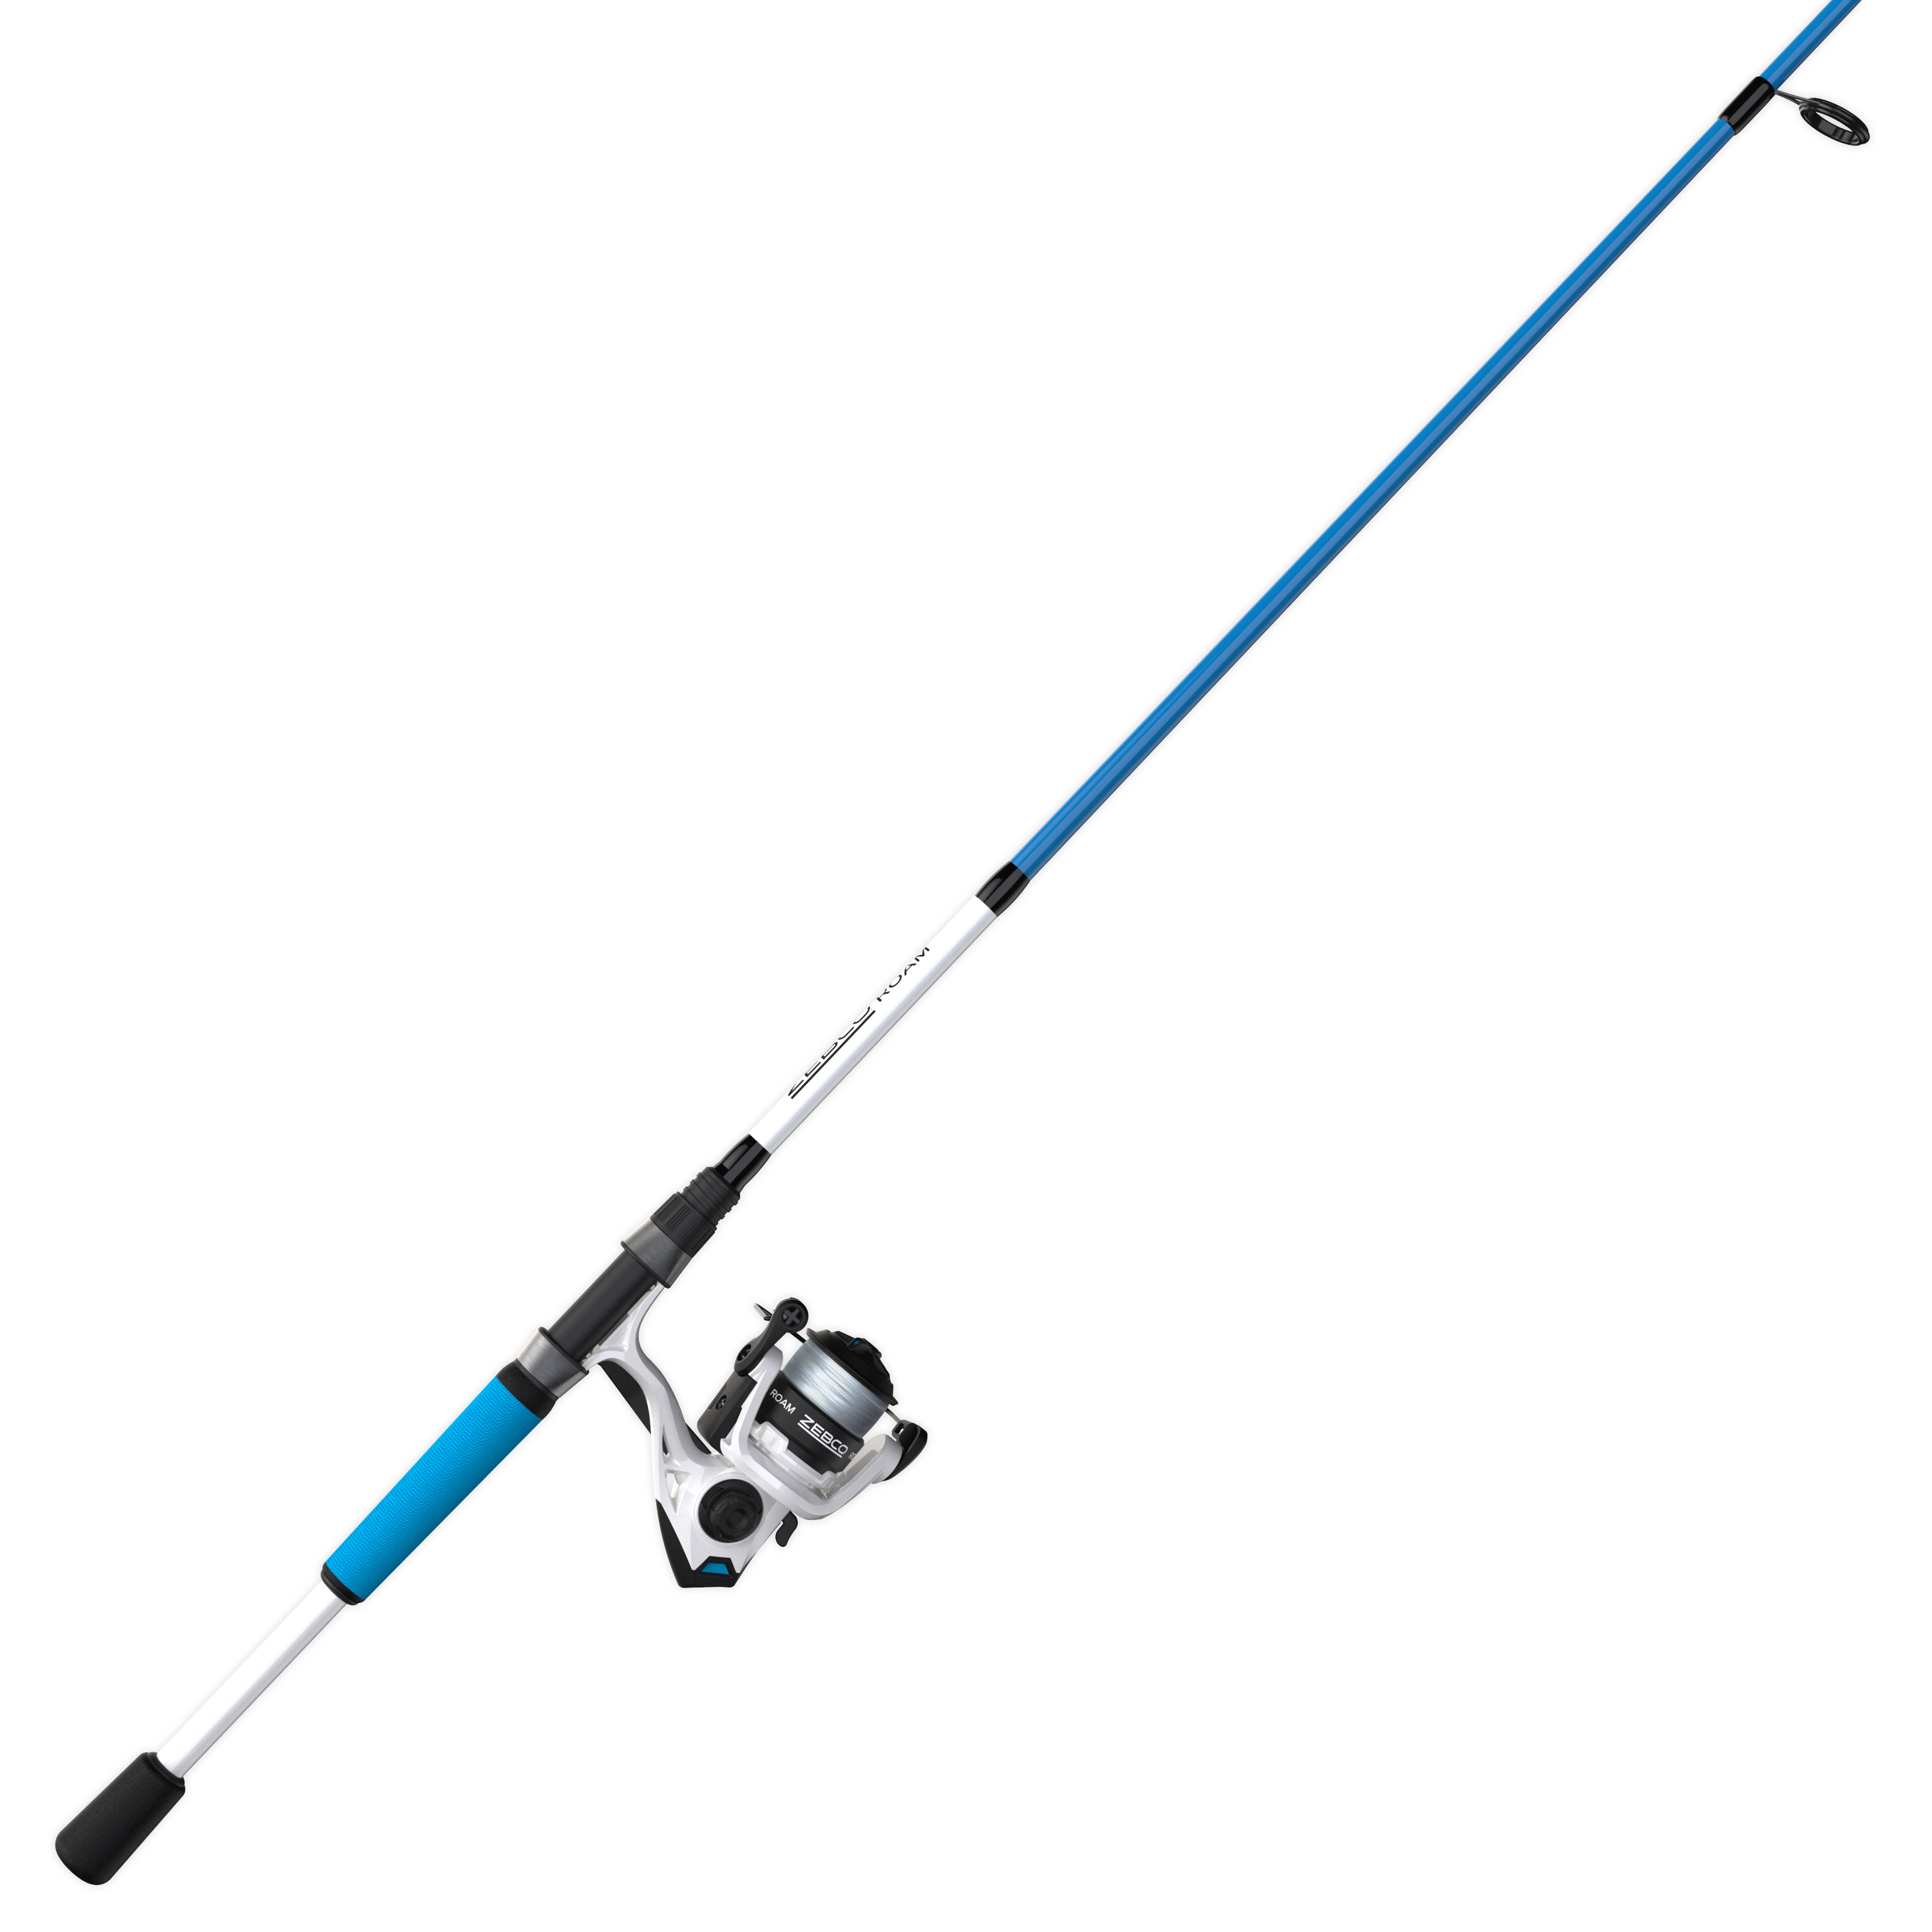 Cajun Rods® Salt and Freshwater Fishing Rods - FISHING USA